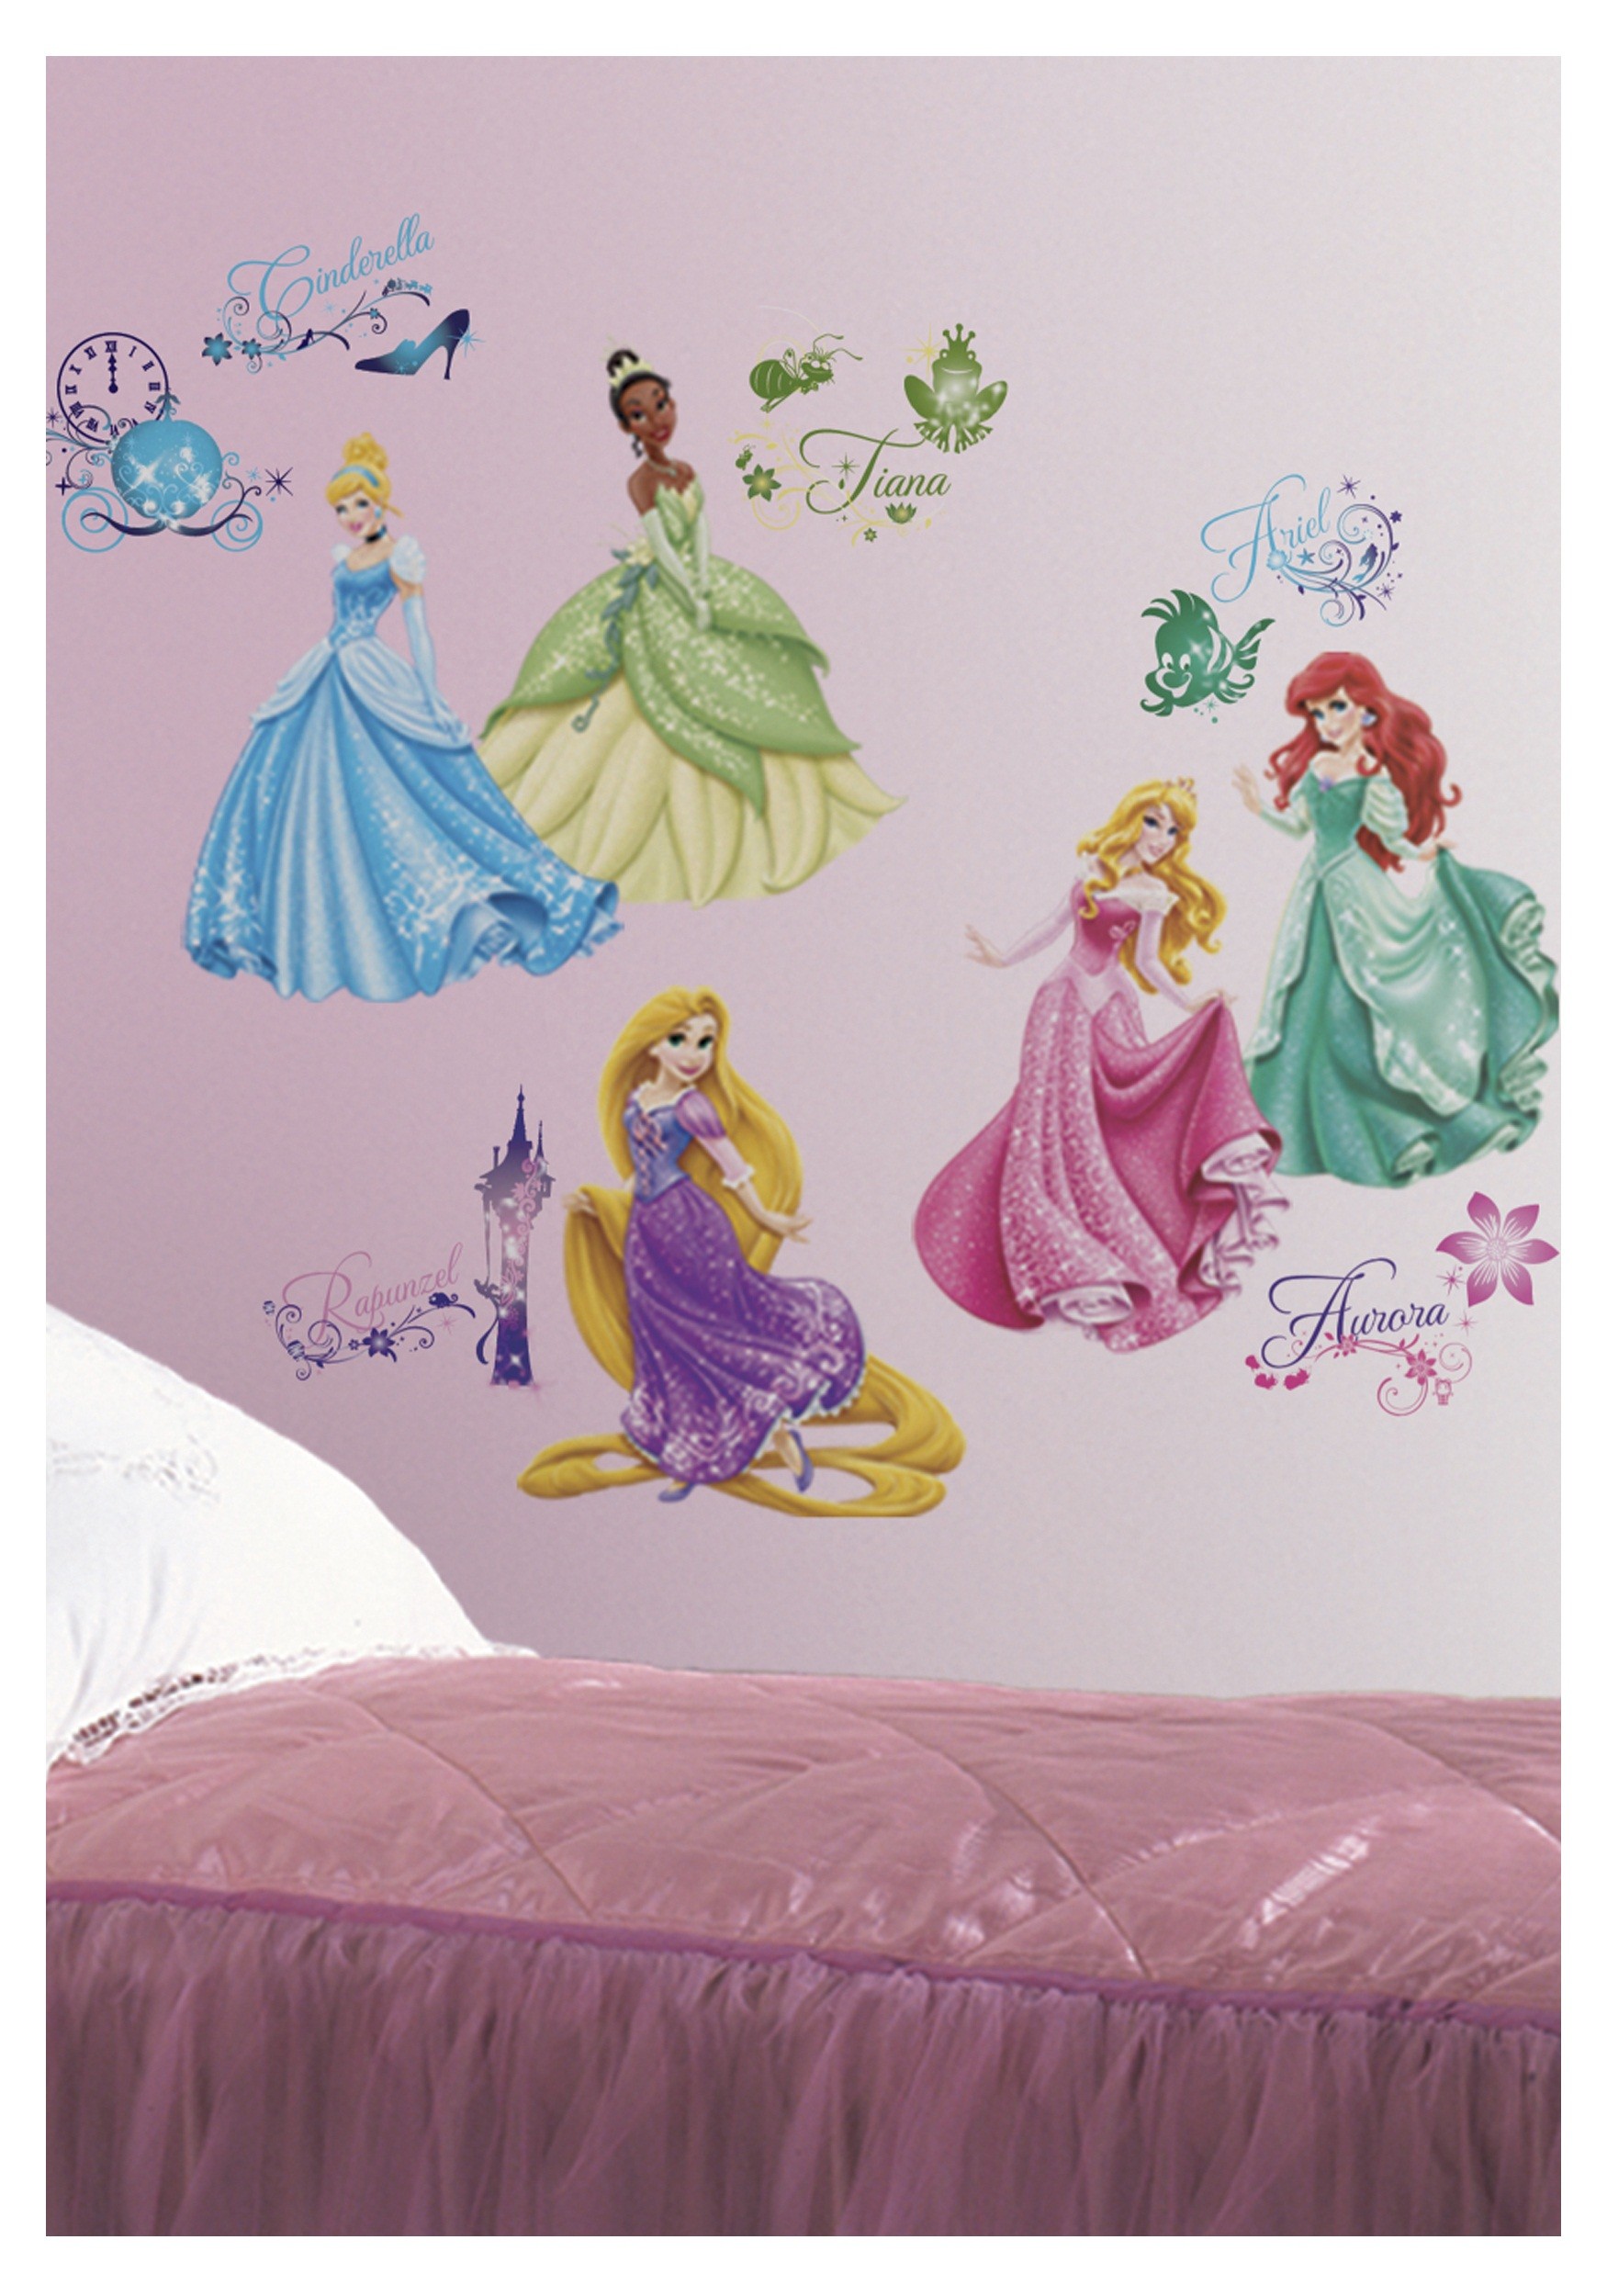 Disney Princess Wall Decals